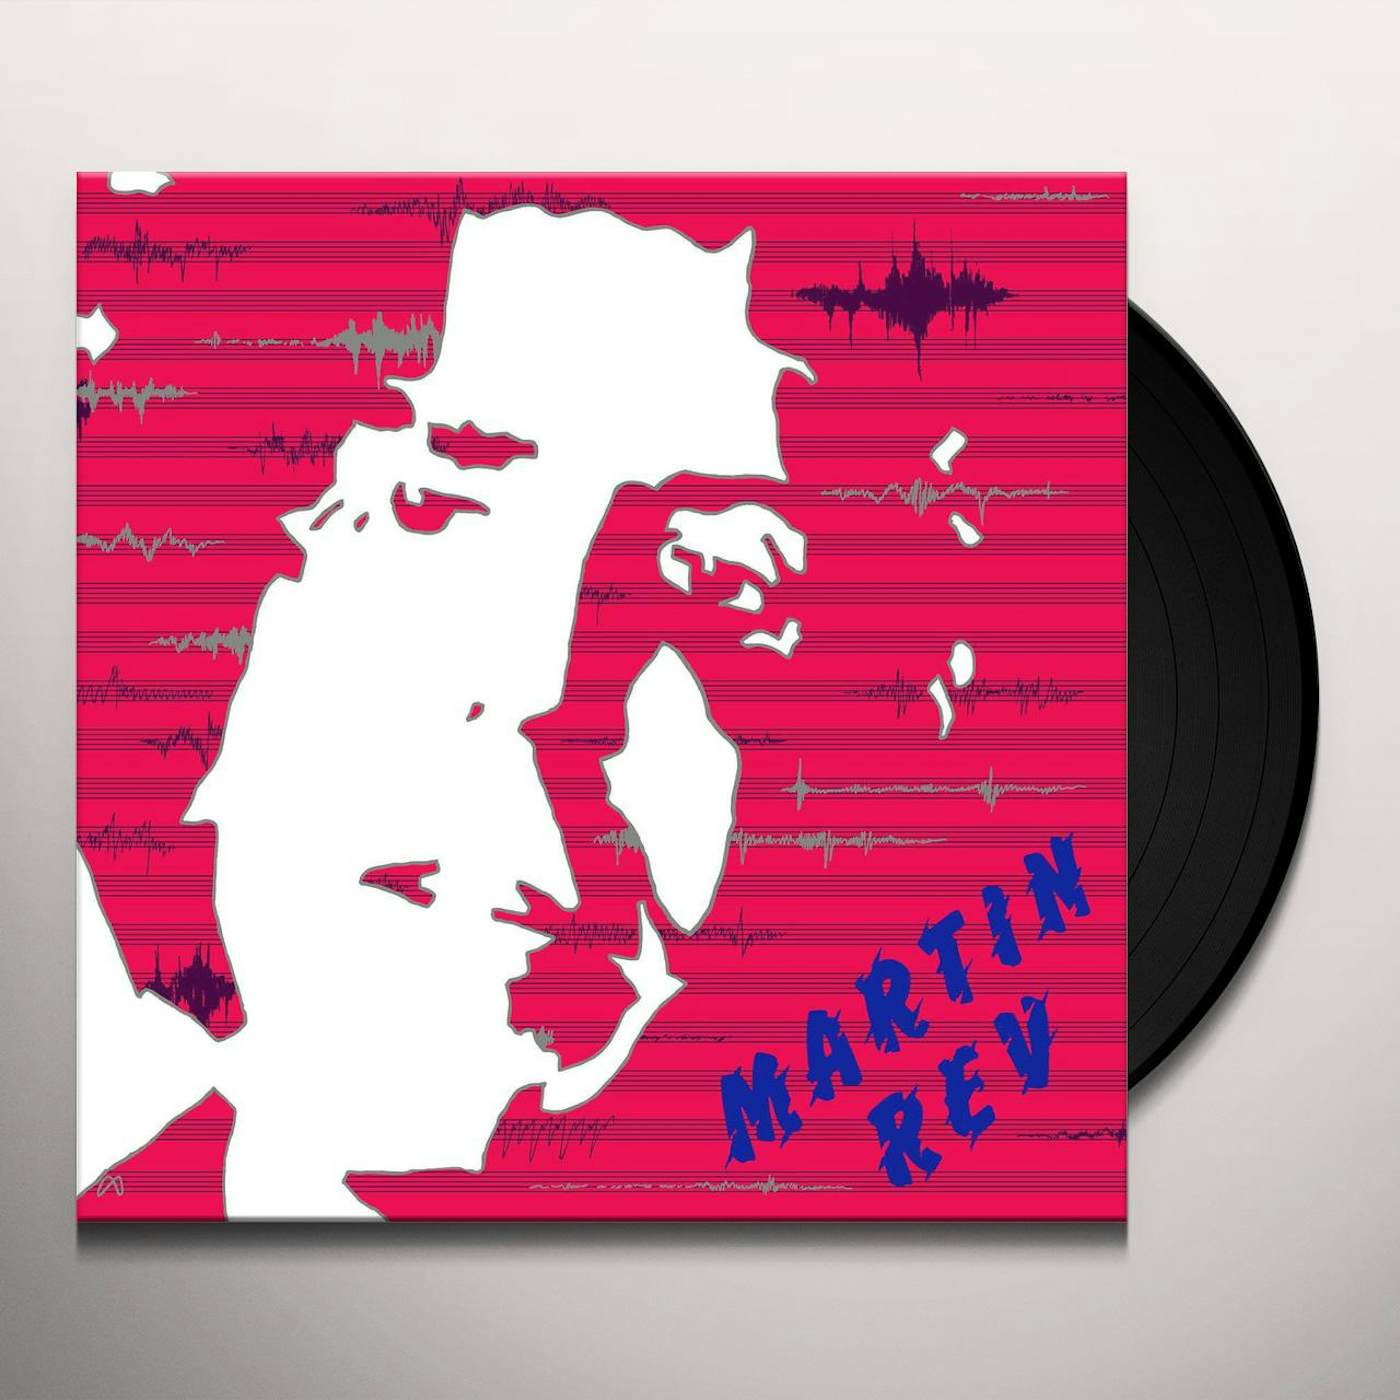  Martin Rev Vinyl Record